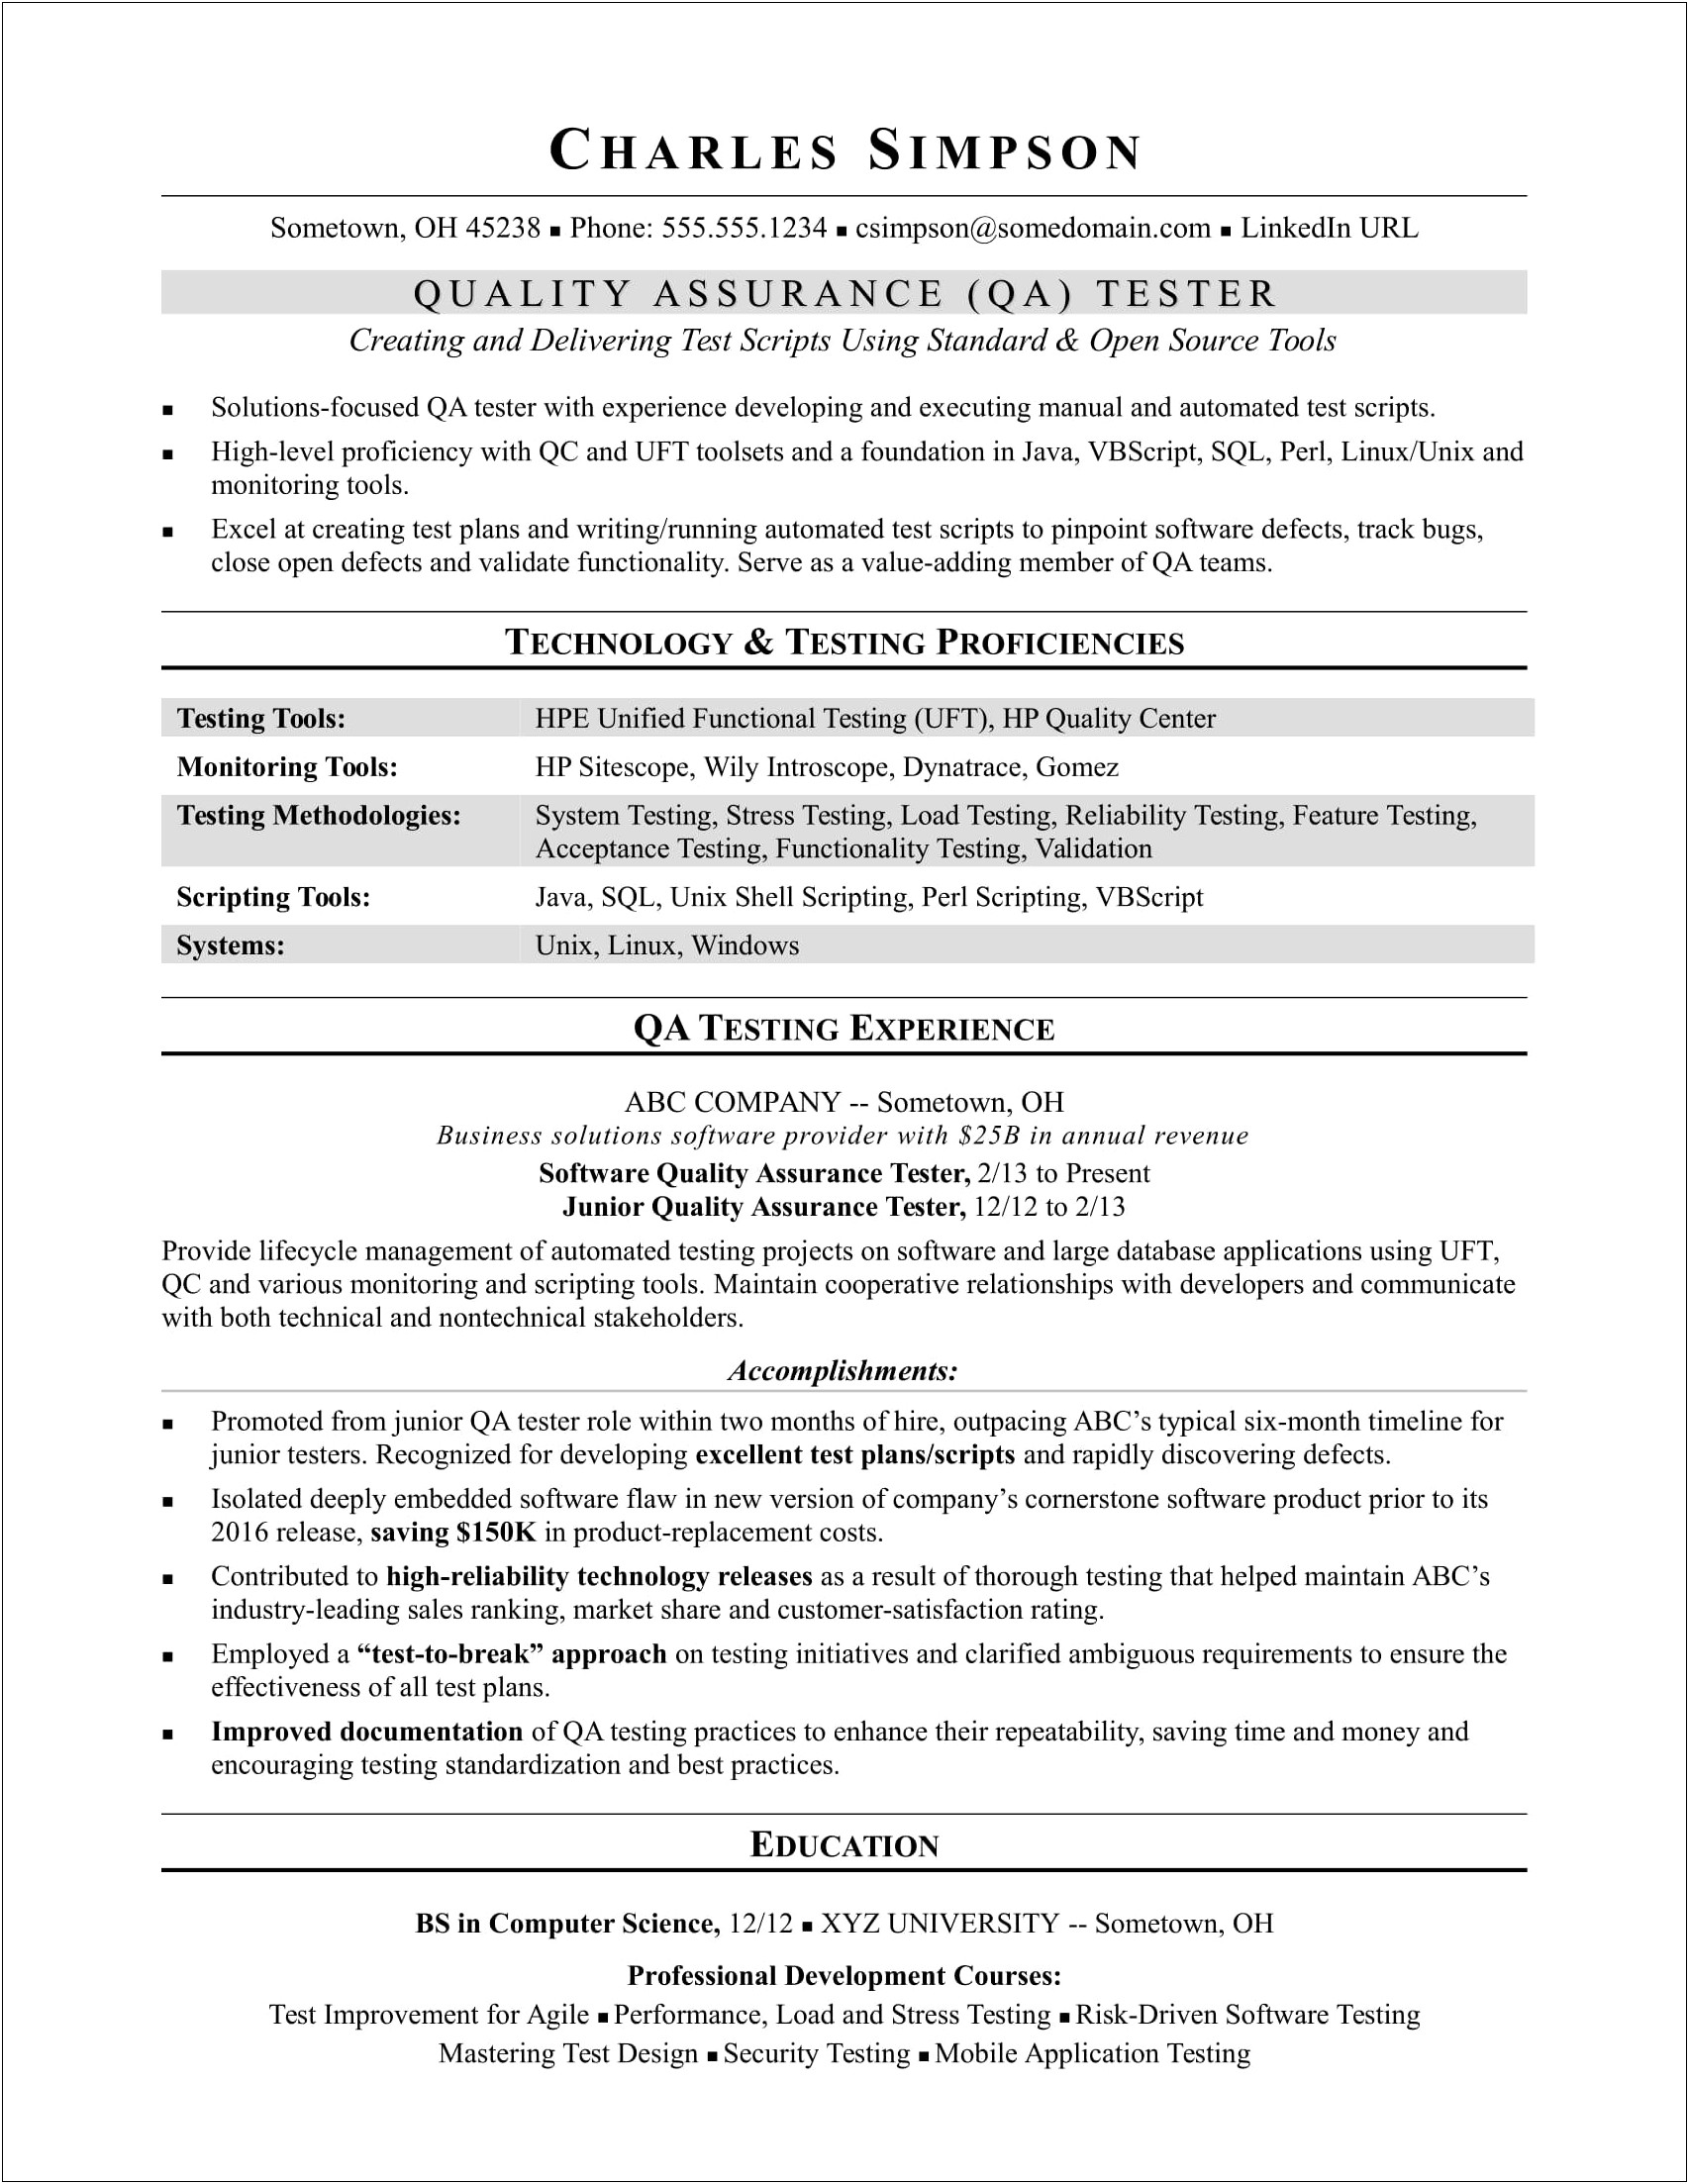 Best Resume Format For Testing Profile